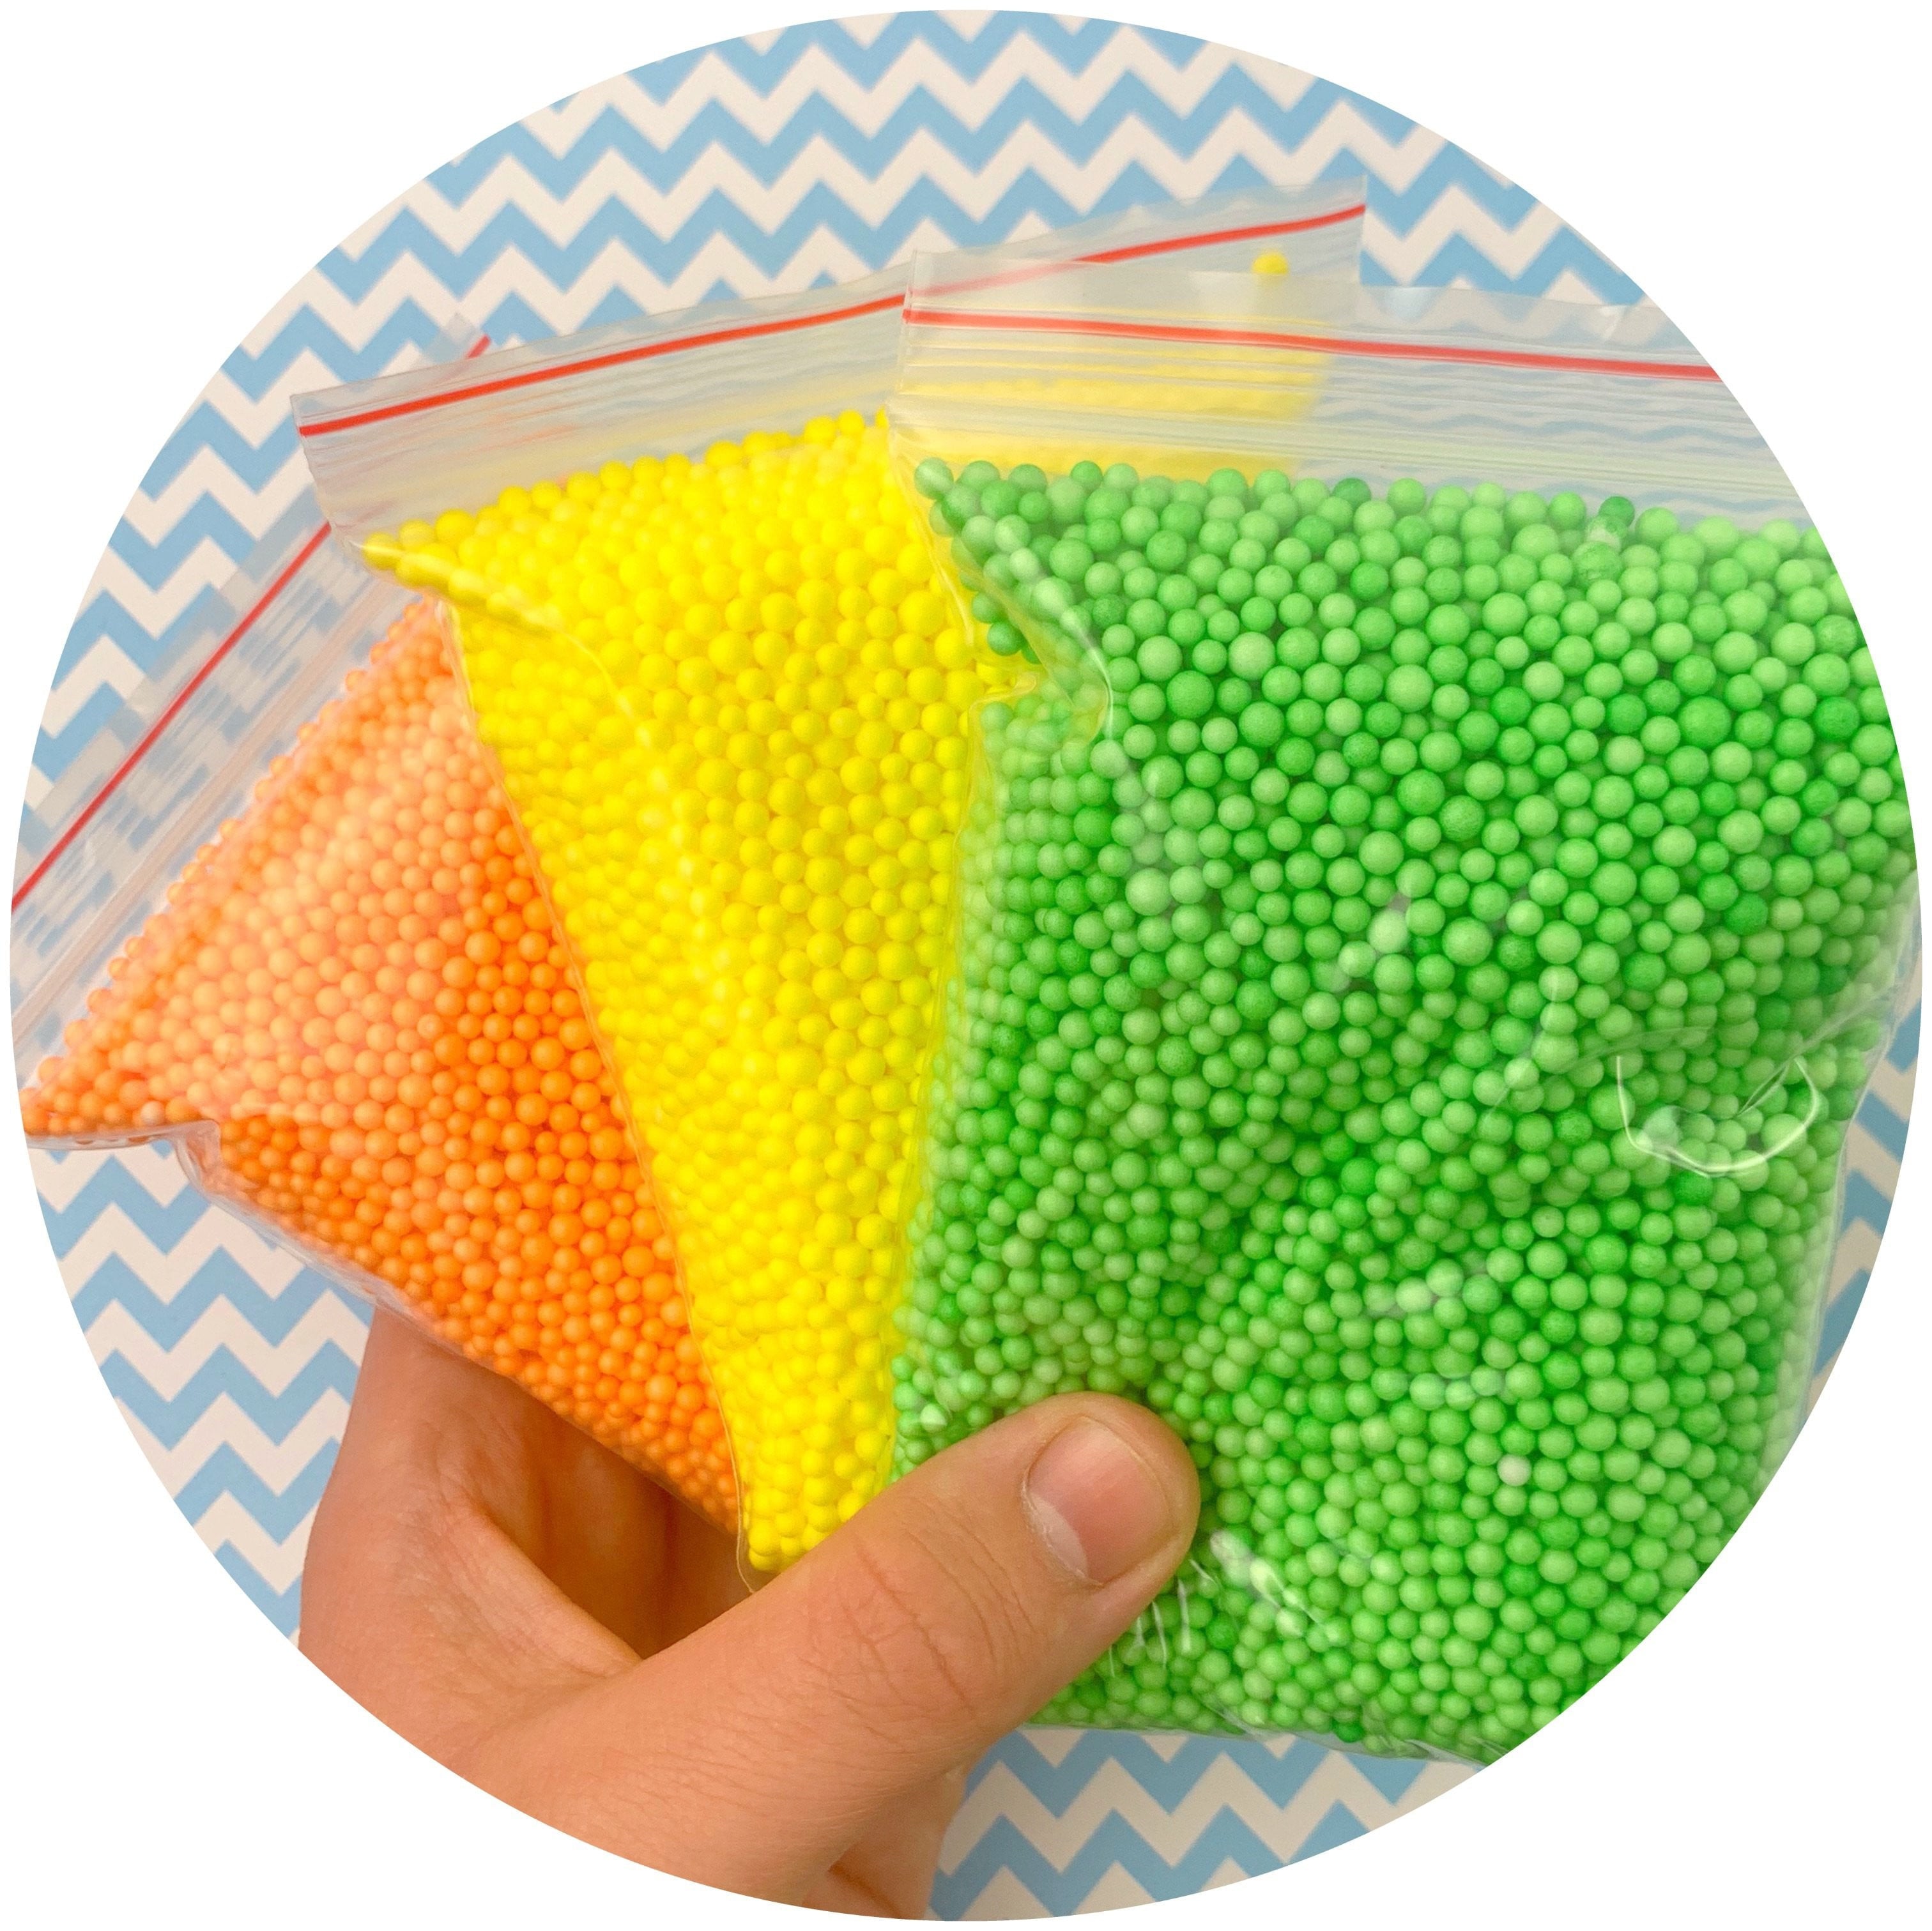 Iridescent Bingsu Beads - 7 colors (2 new!), Dope Slimes LLC